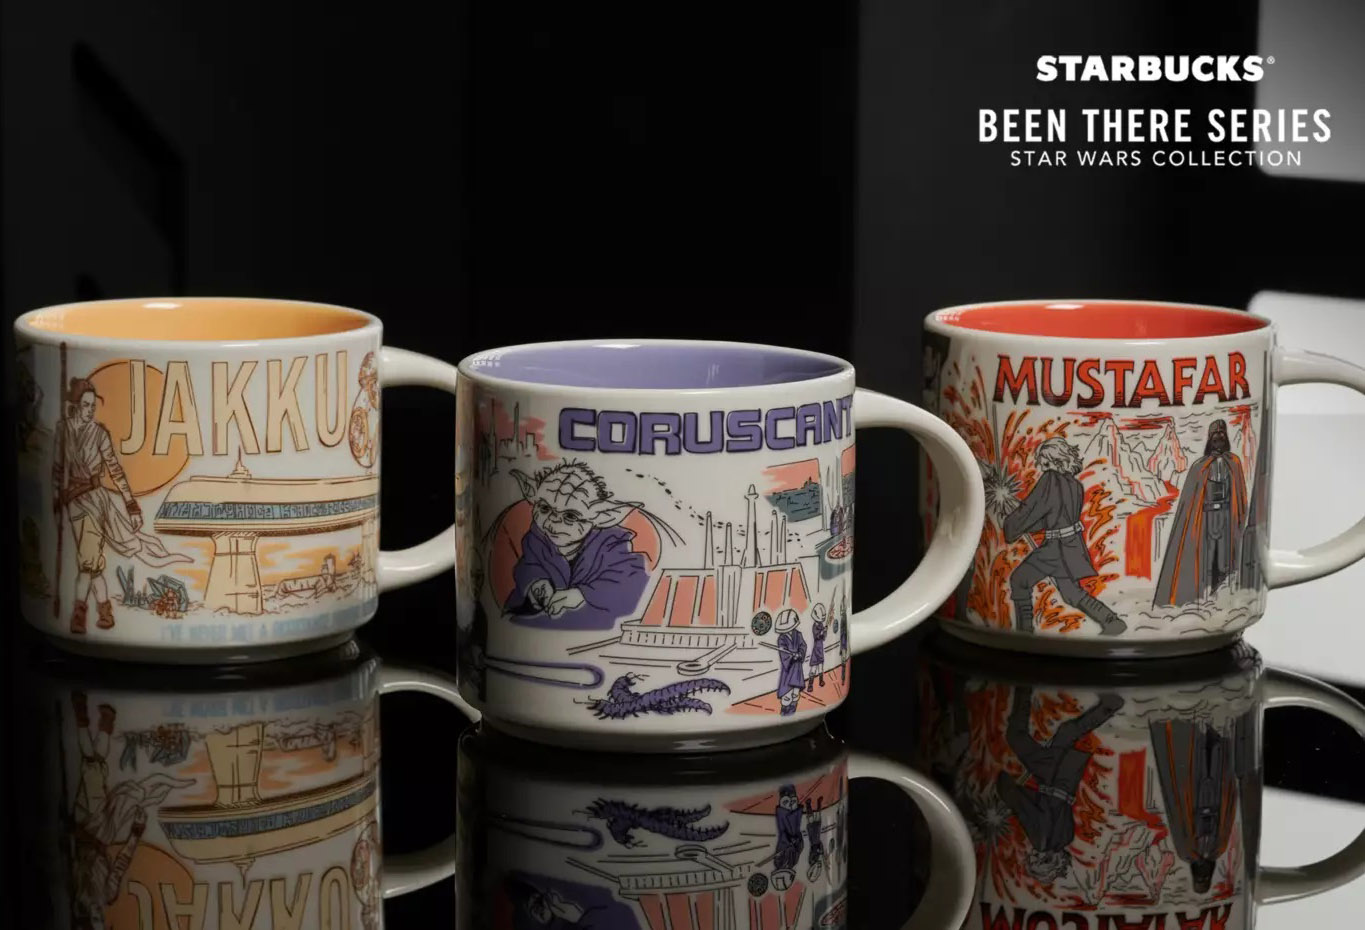 Starbucks Star Wars mugs for the May 4th, 2023 Jakku, Coruscant, Mustafar mug